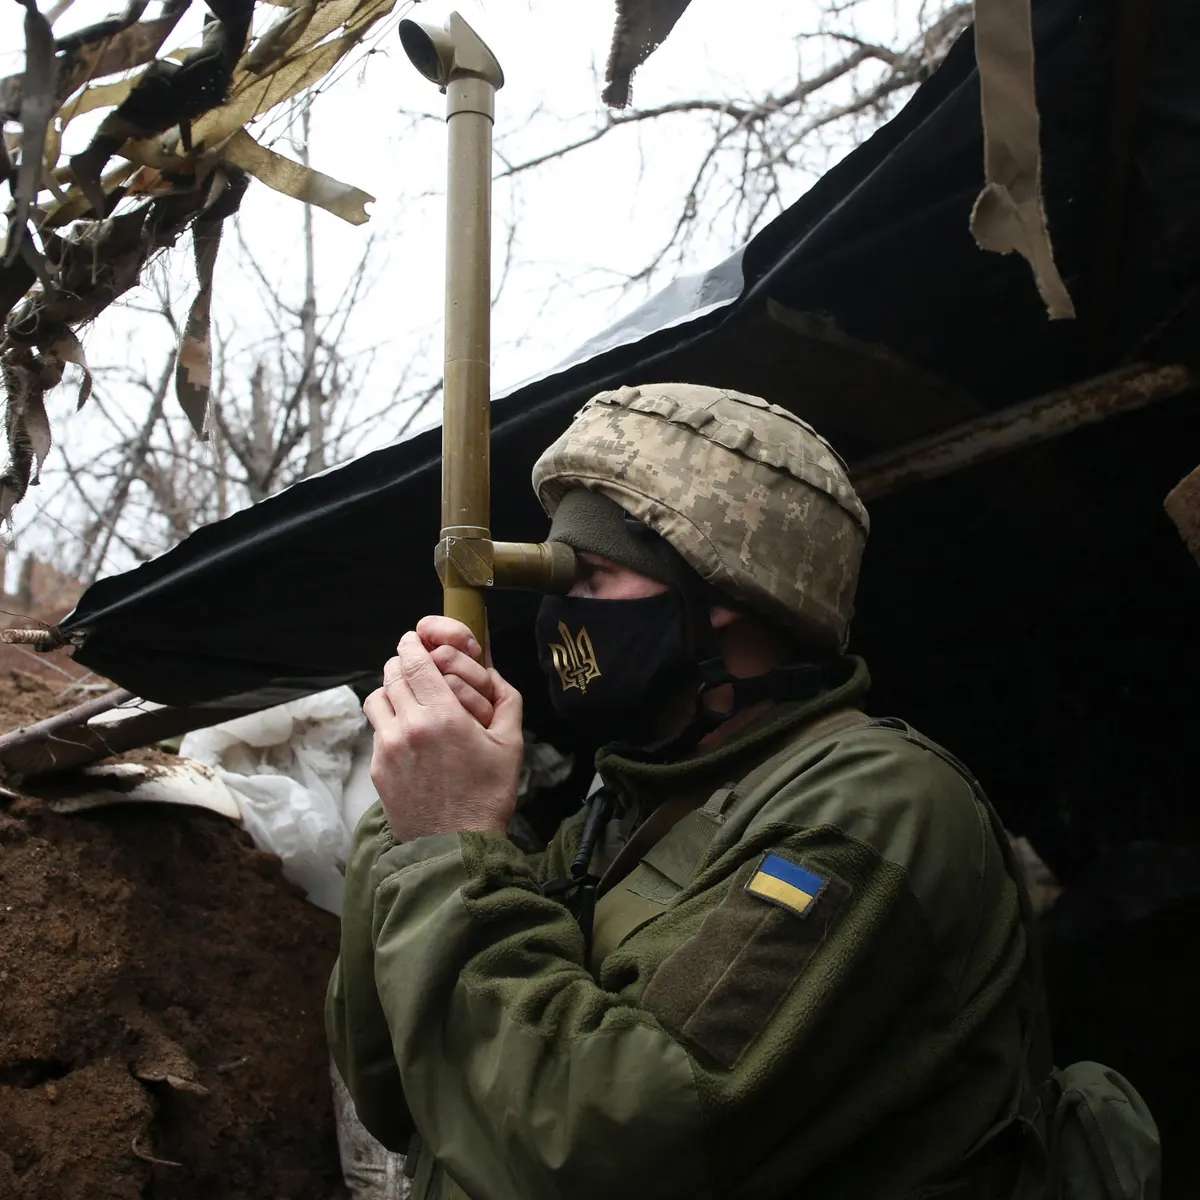 Russian troop build up near Ukraine alarms